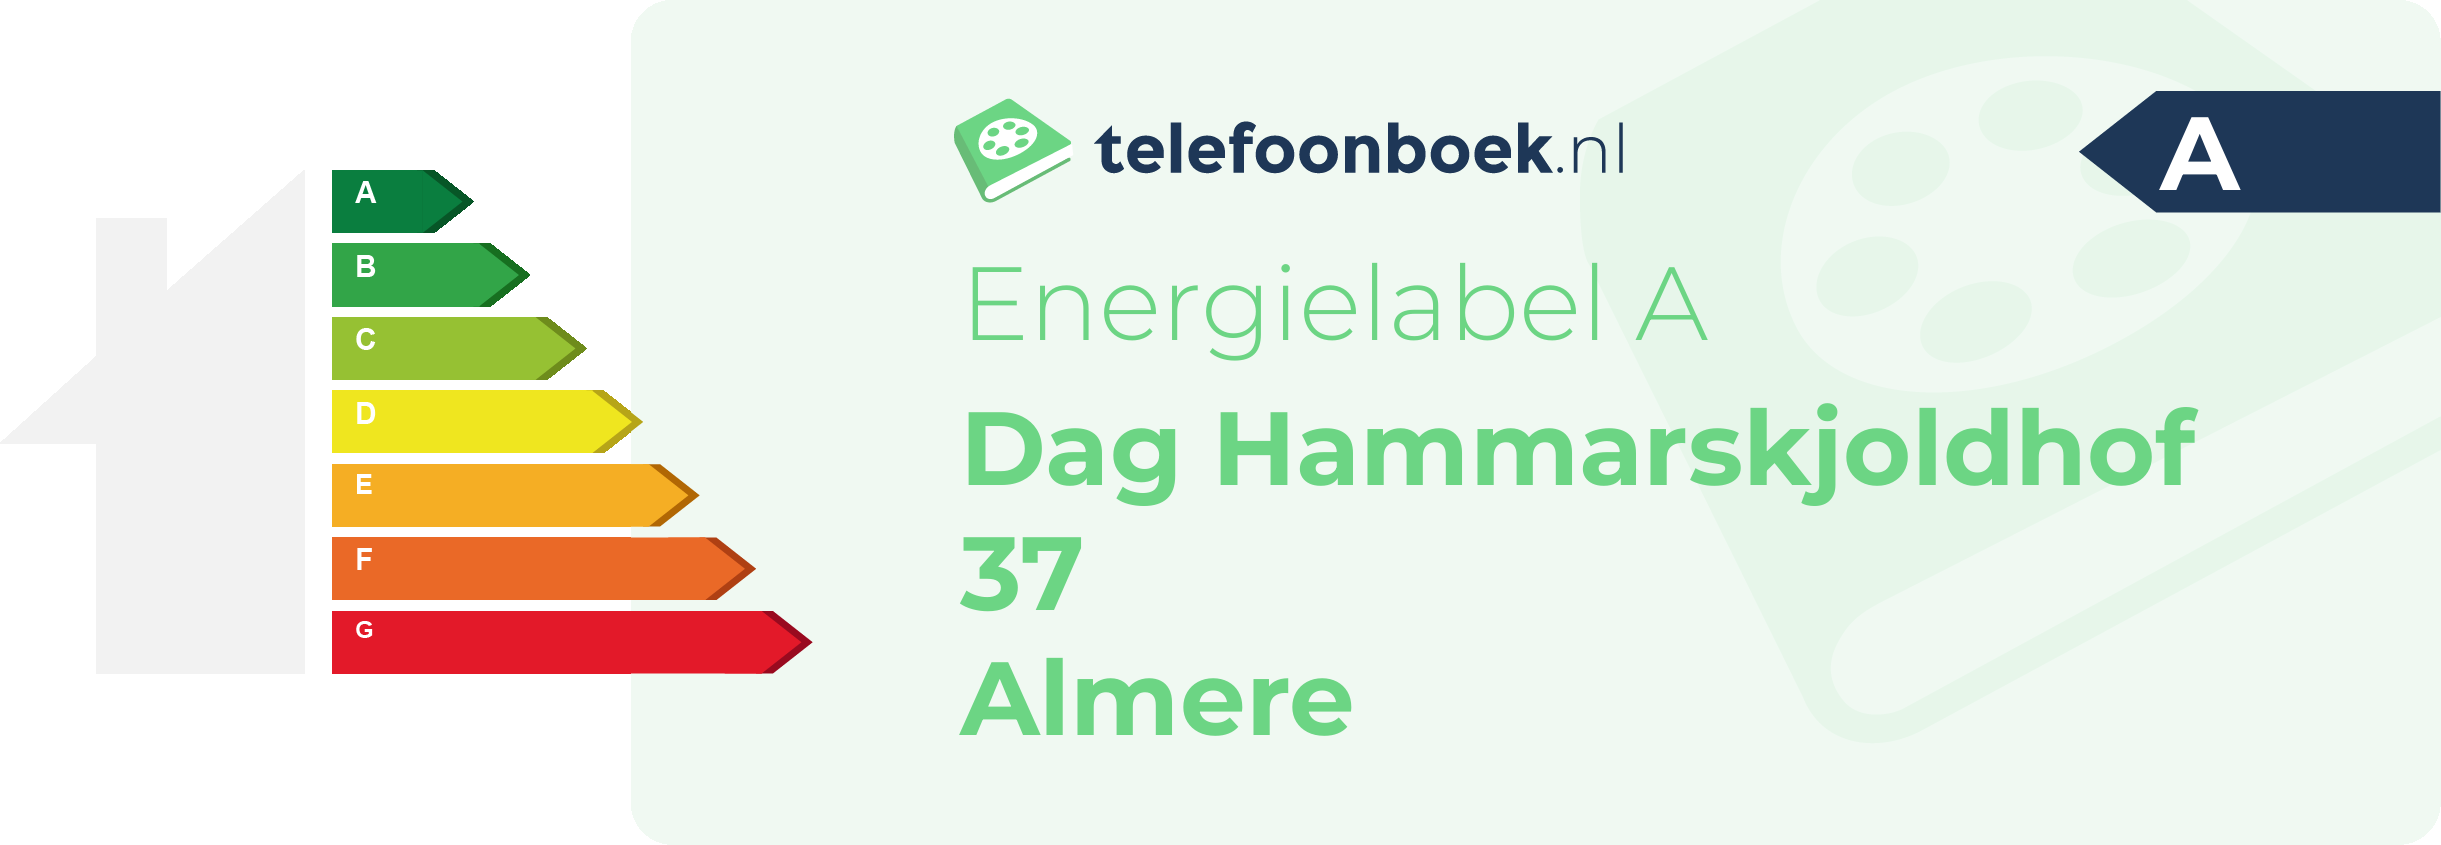 Energielabel Dag Hammarskjoldhof 37 Almere